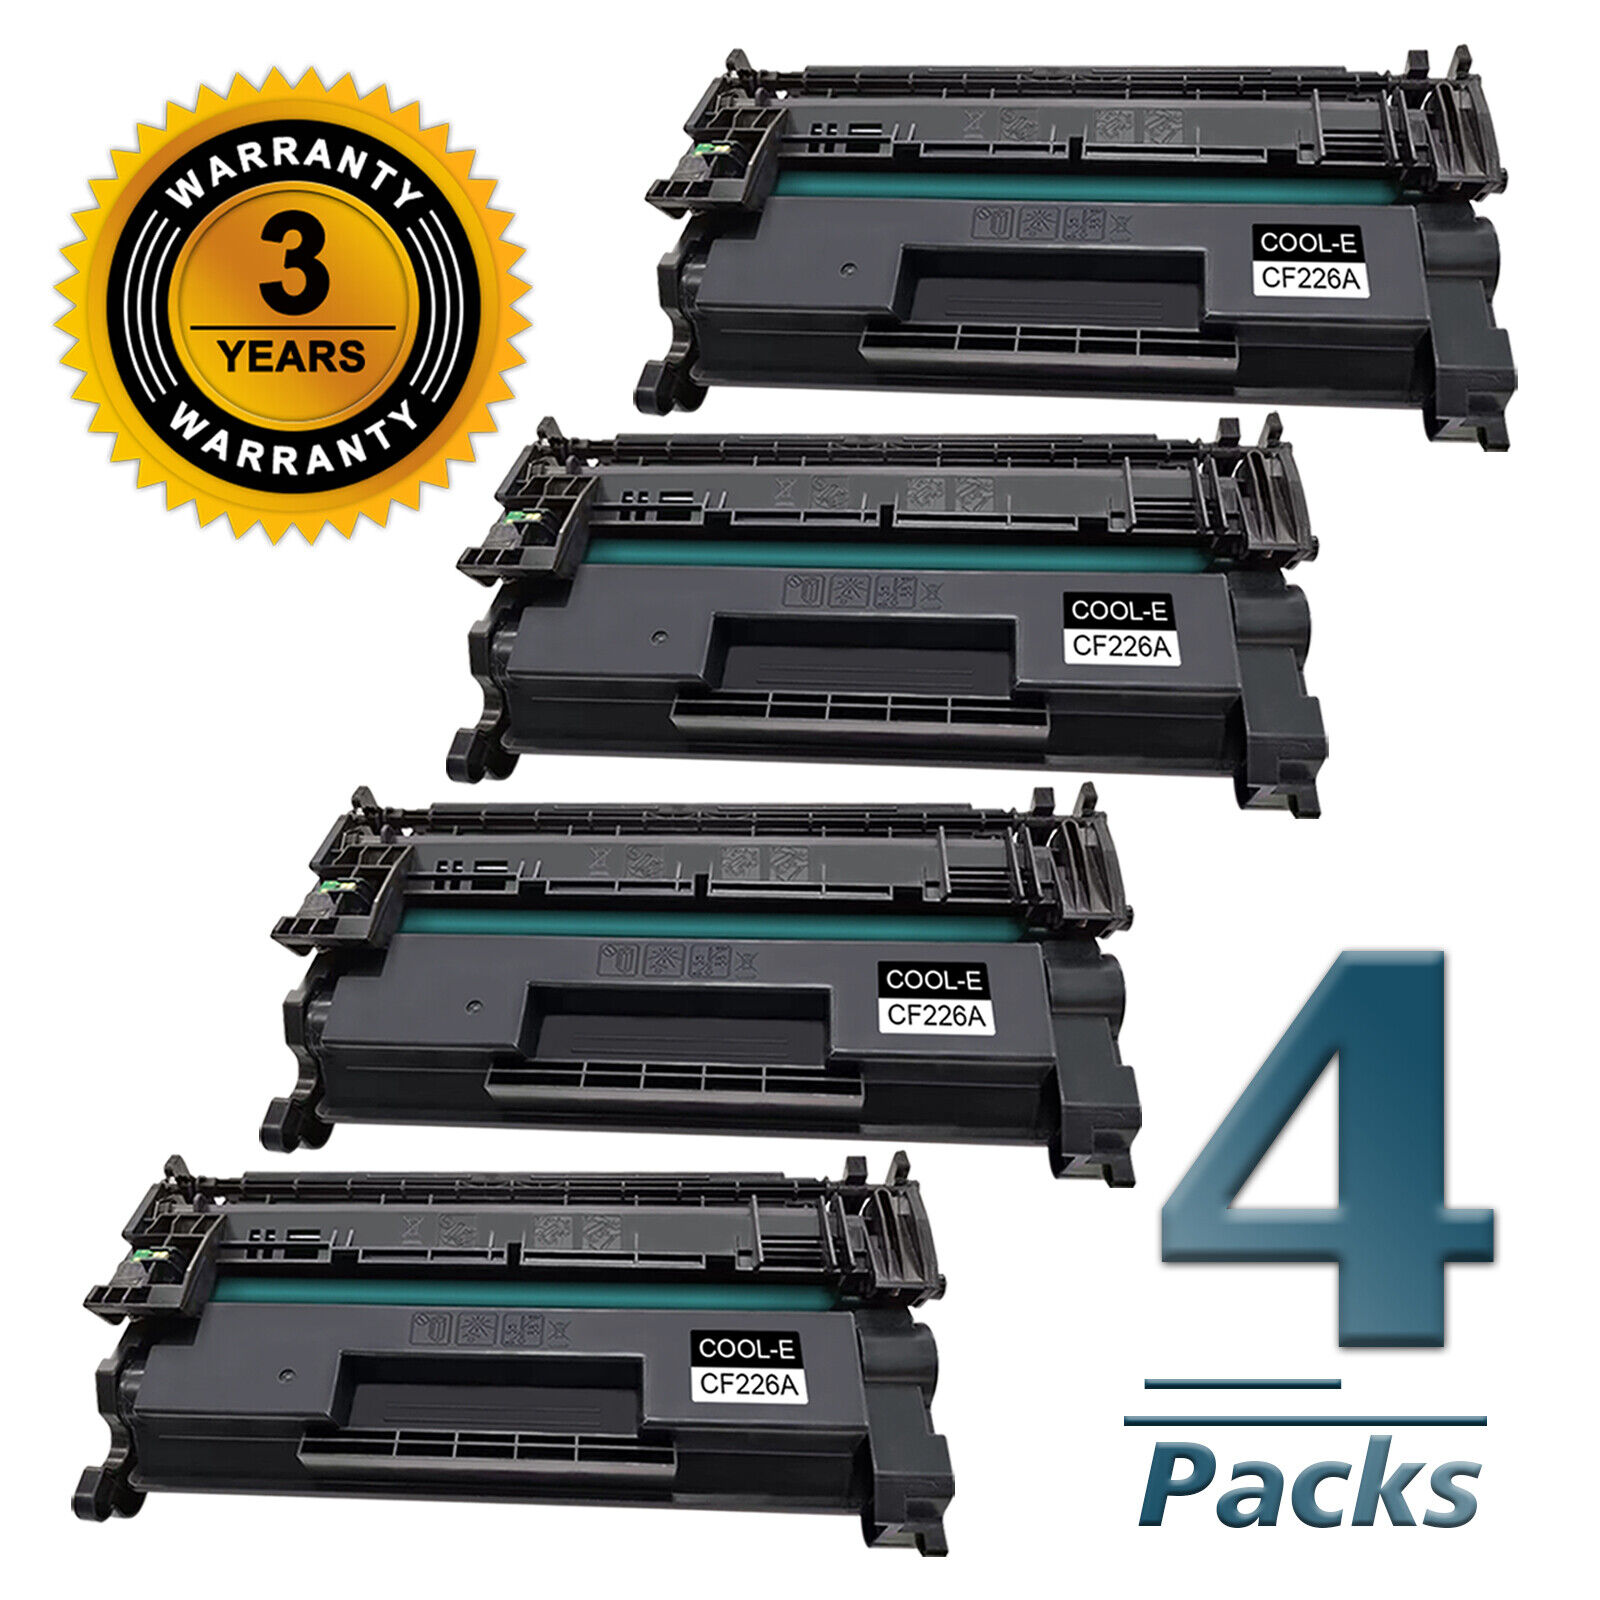 Toner Cartridge HP Printer Replacement HP 26A CF226A 26X CF226X Compatible lot